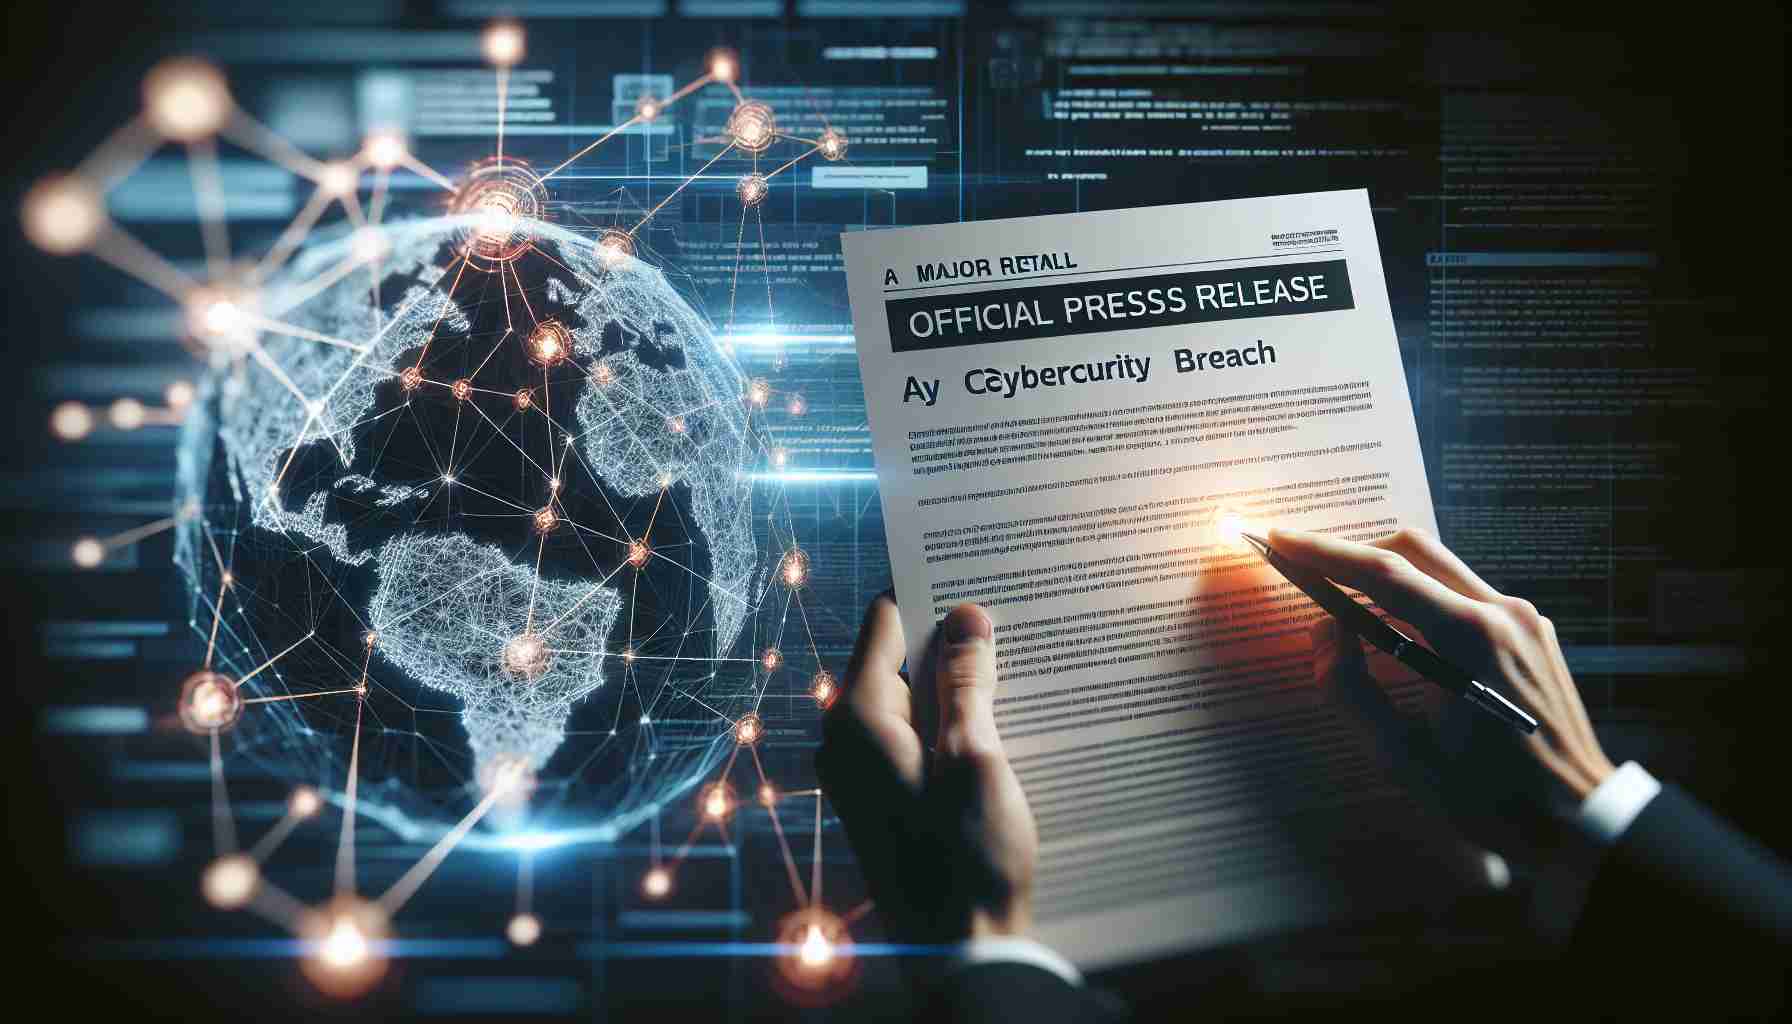 Major Retail Company Announces Cybersecurity Breach